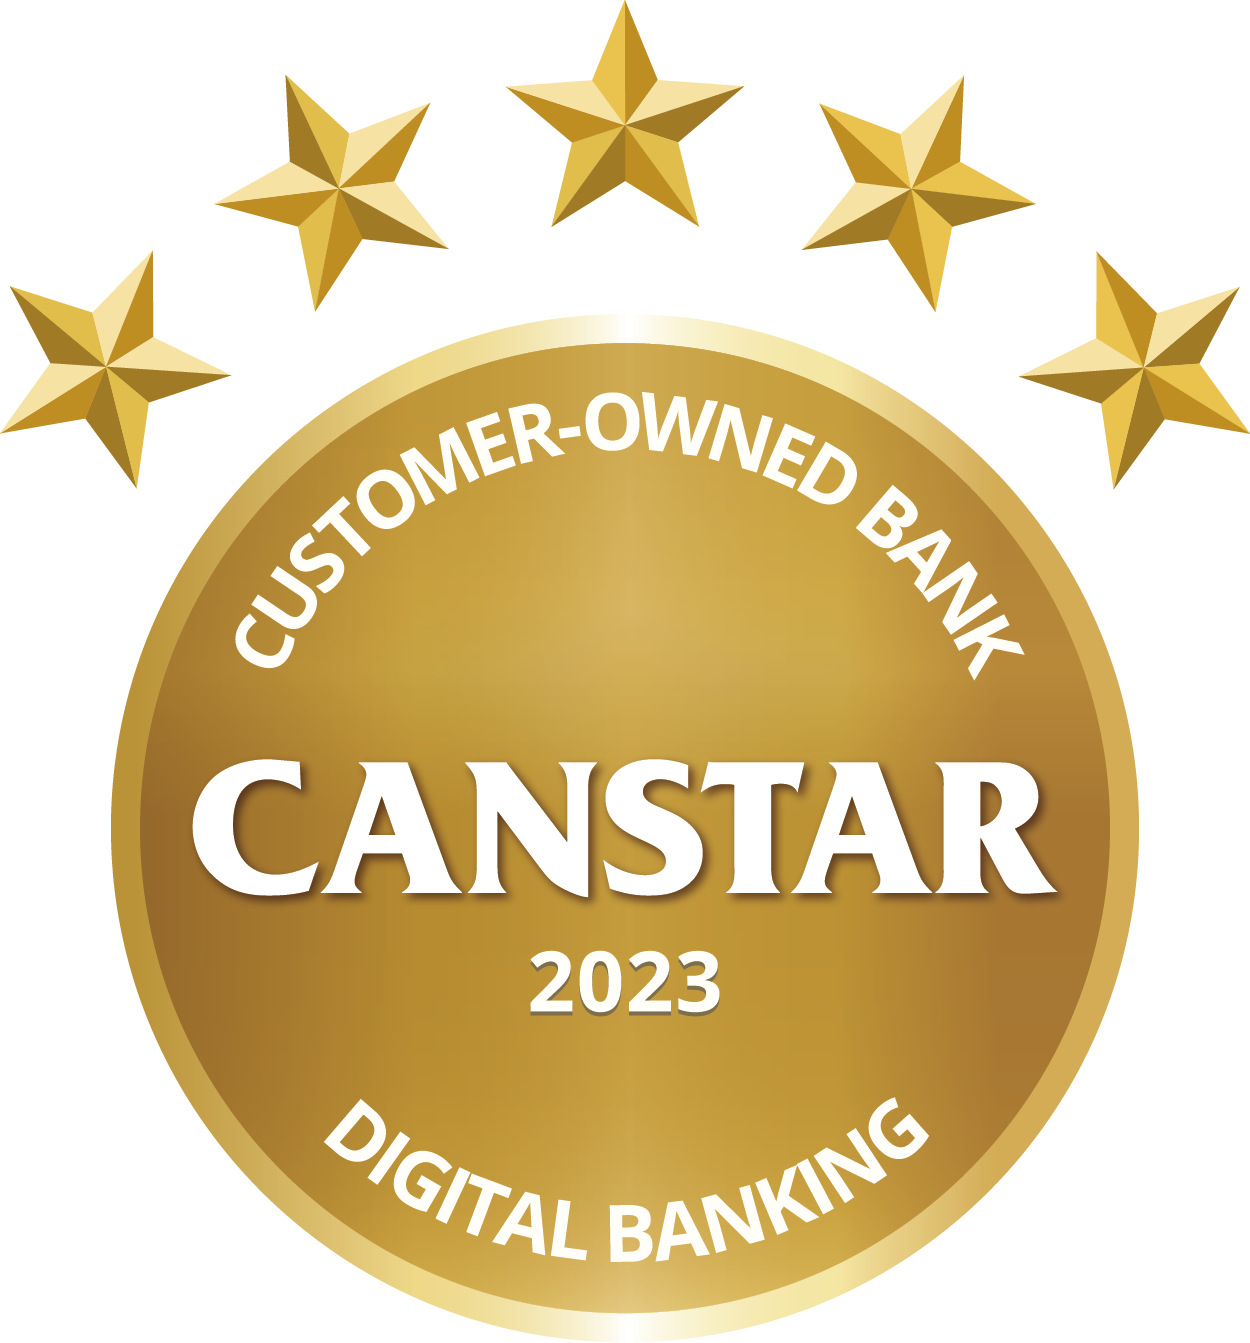 Canstar 2023 Digital Banking